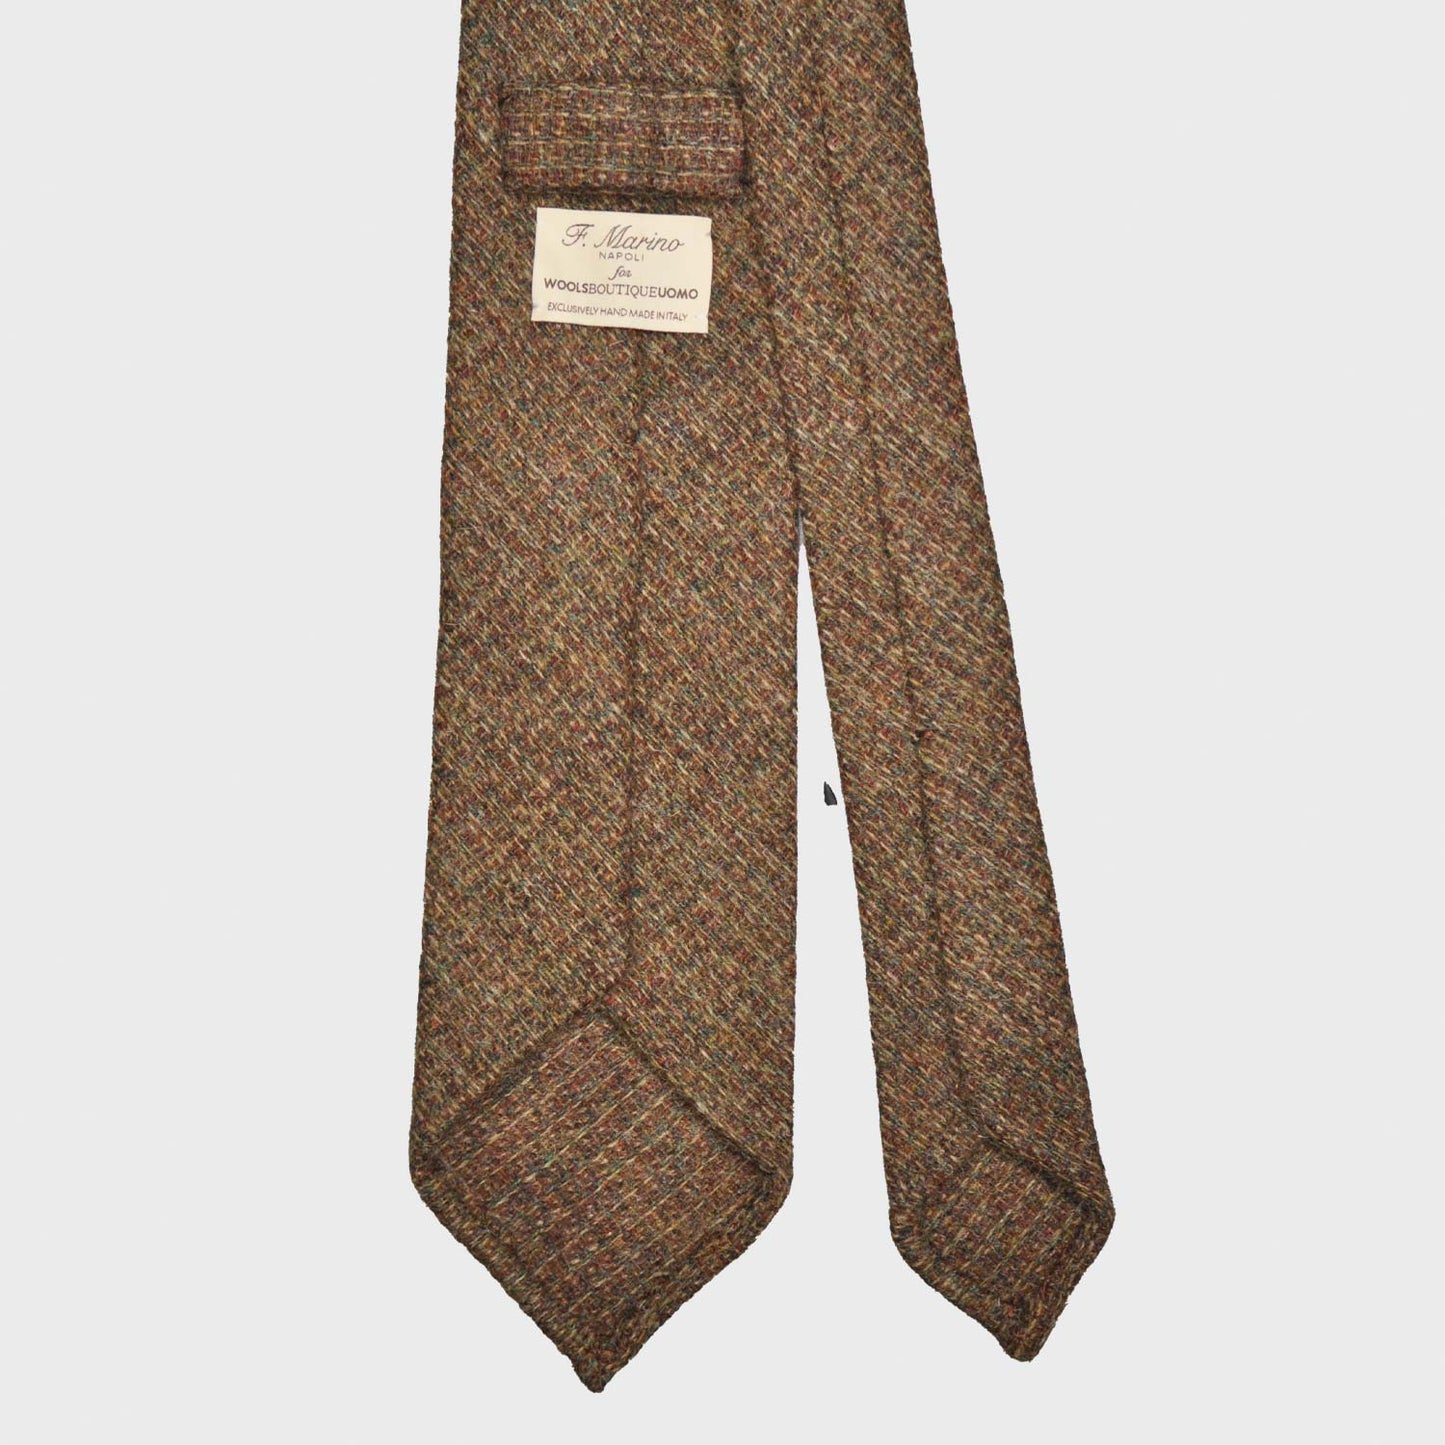 Copper Brown Tweed Necktie Classic Plain Color